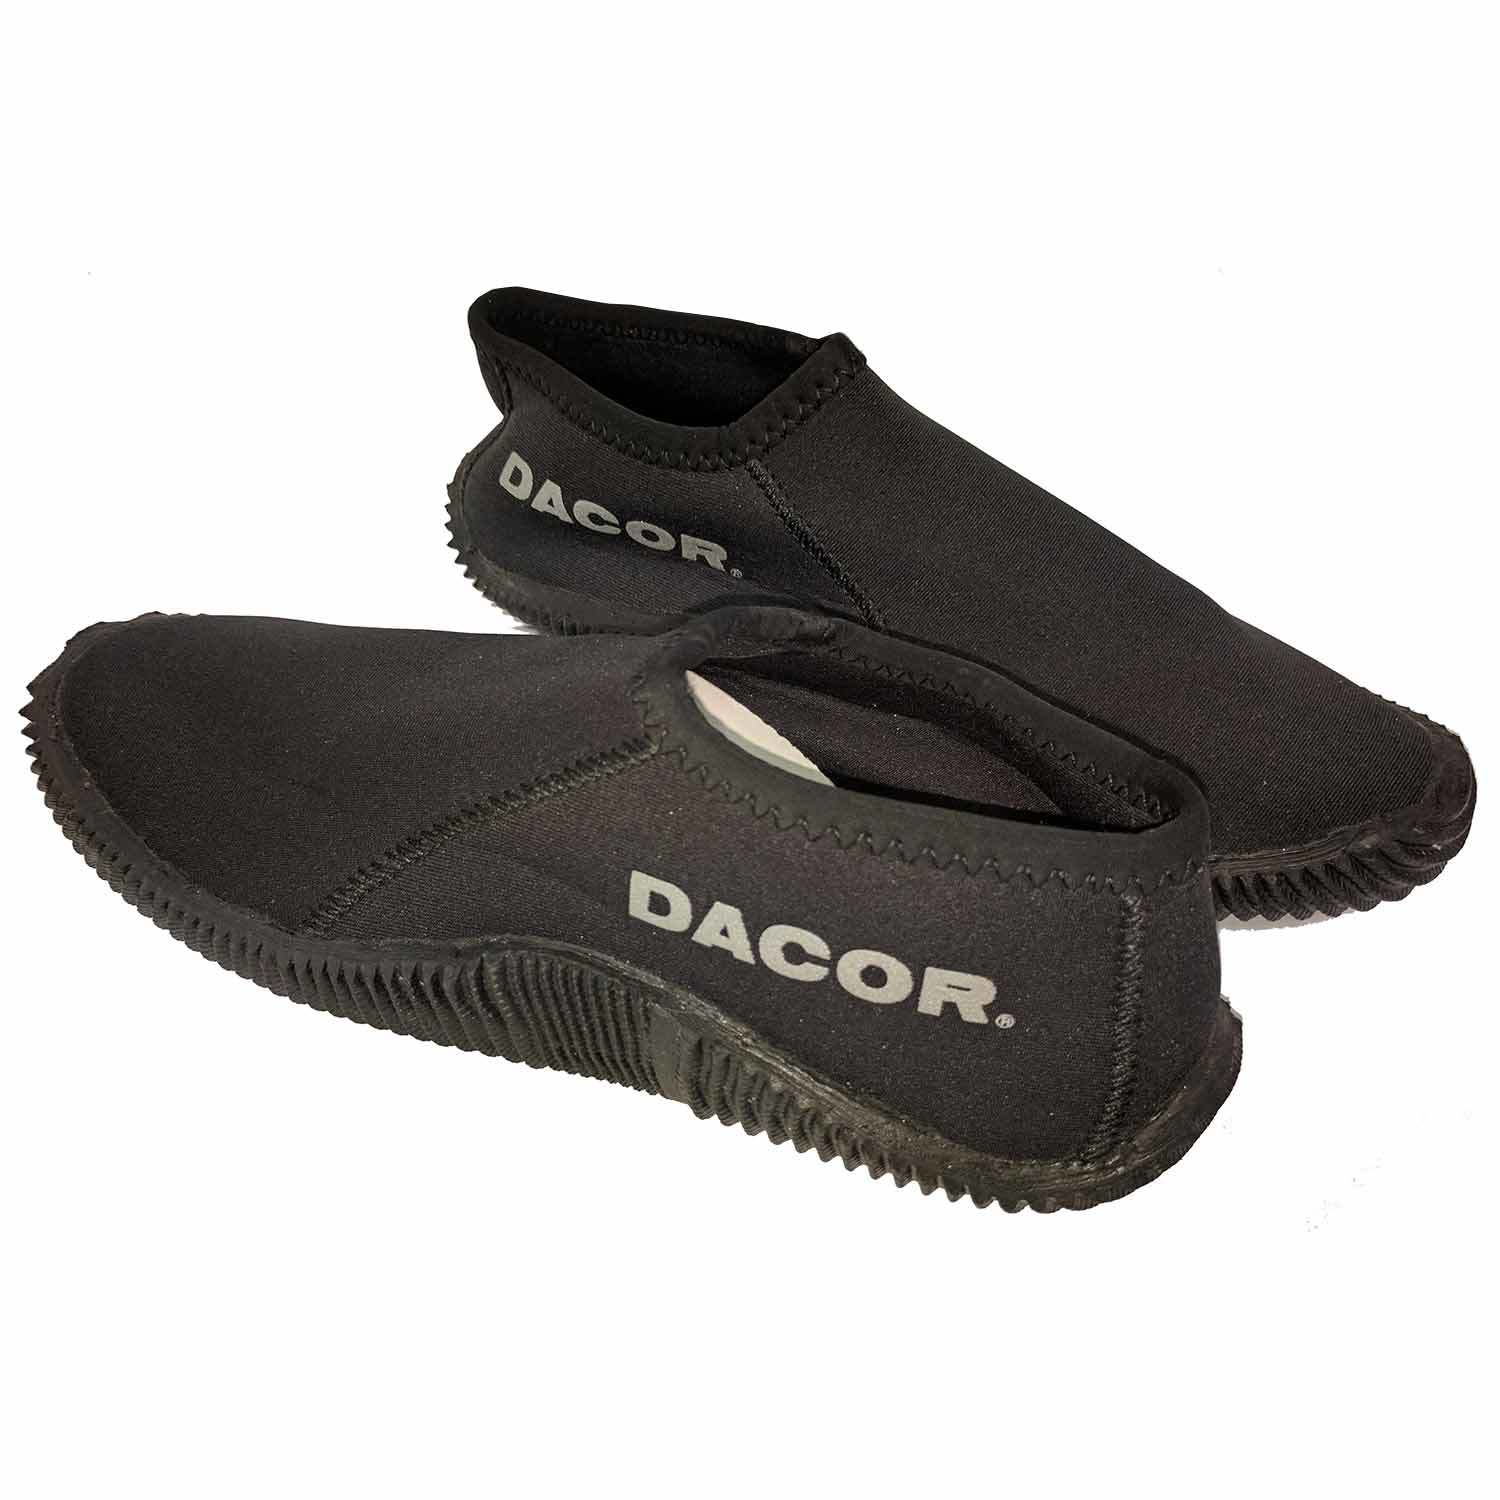 Dacor Low Socks Size 13 